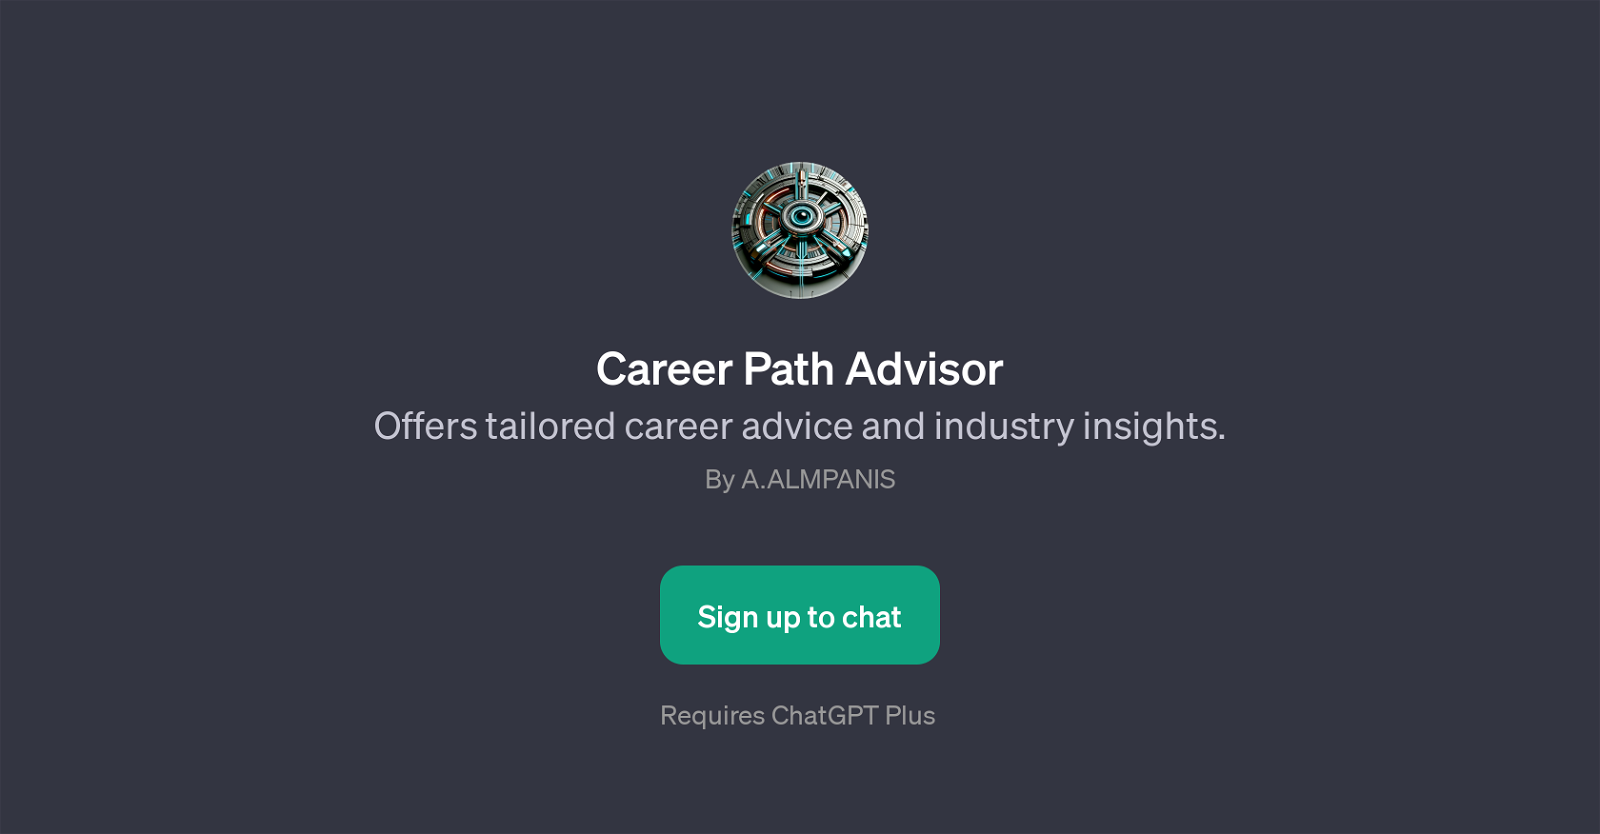 Career Path Advisor website